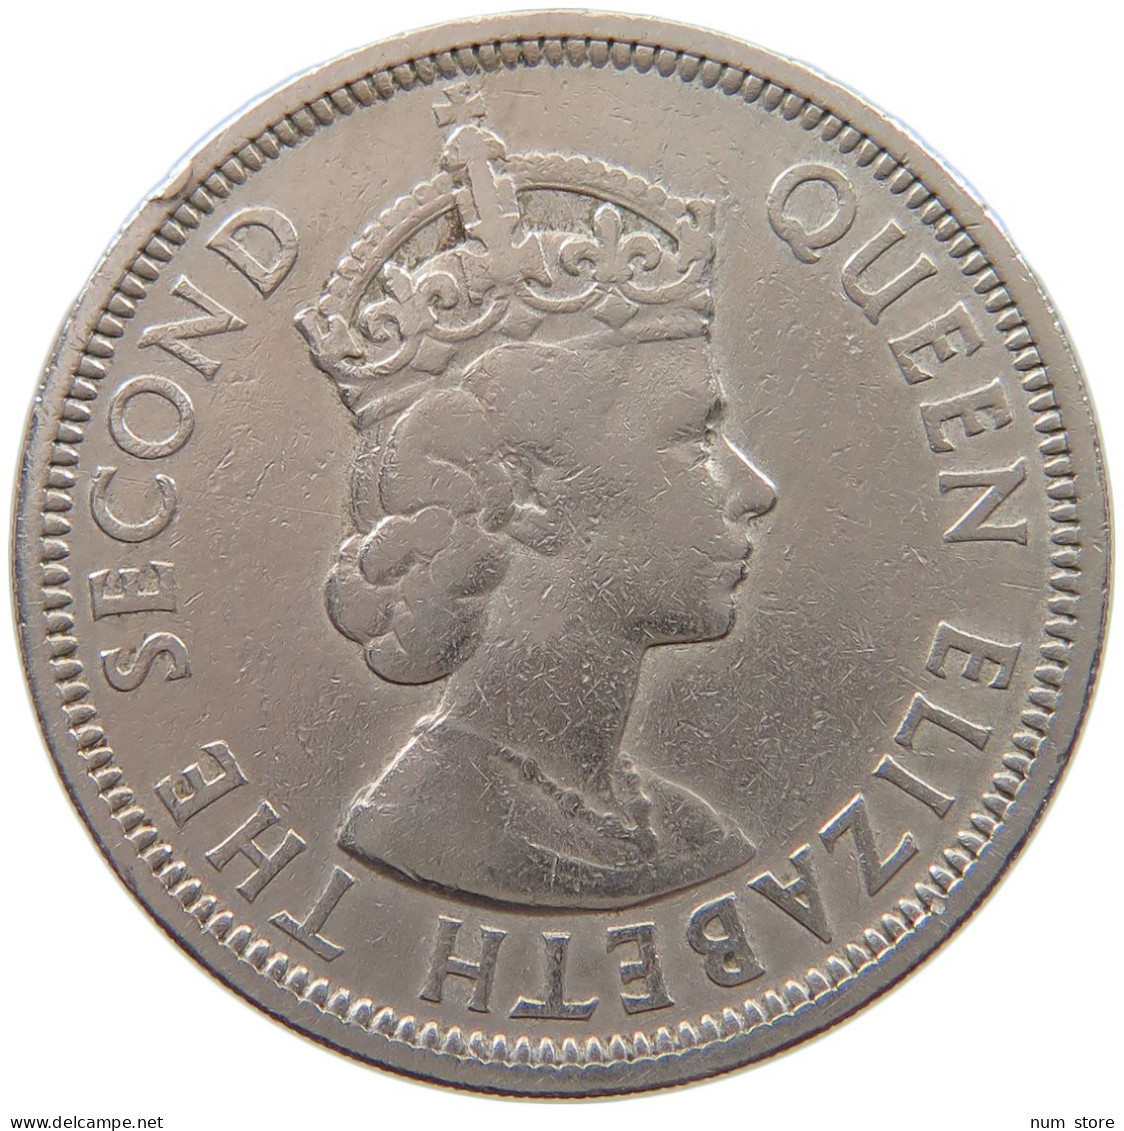 BRITISH CARIBBEAN TERRITORIES 50 CENTS 1955 Elizabeth II. (1952-2022) #a060 0607 - Caraibi Britannici (Territori)